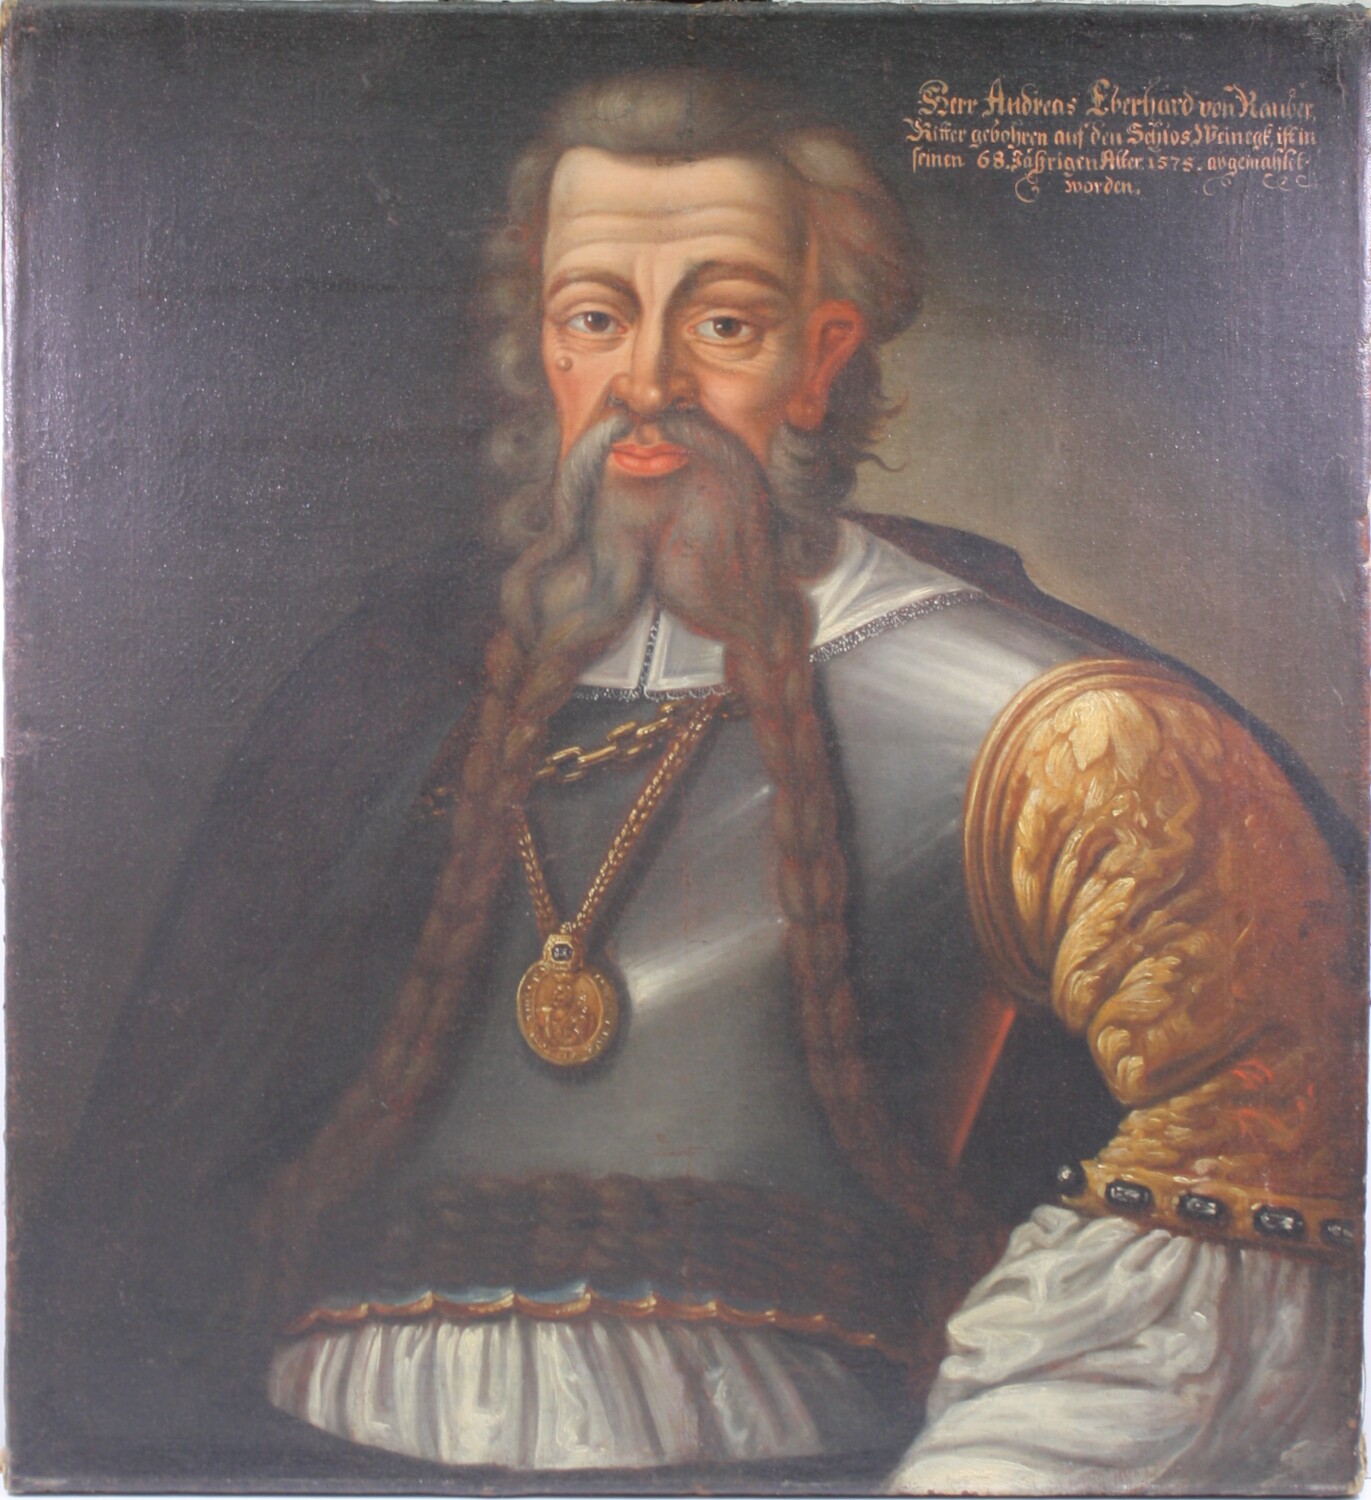 Gemälde: "Andreas Eberhard von Rauber" (Drilandmuseum CC BY-NC-SA)